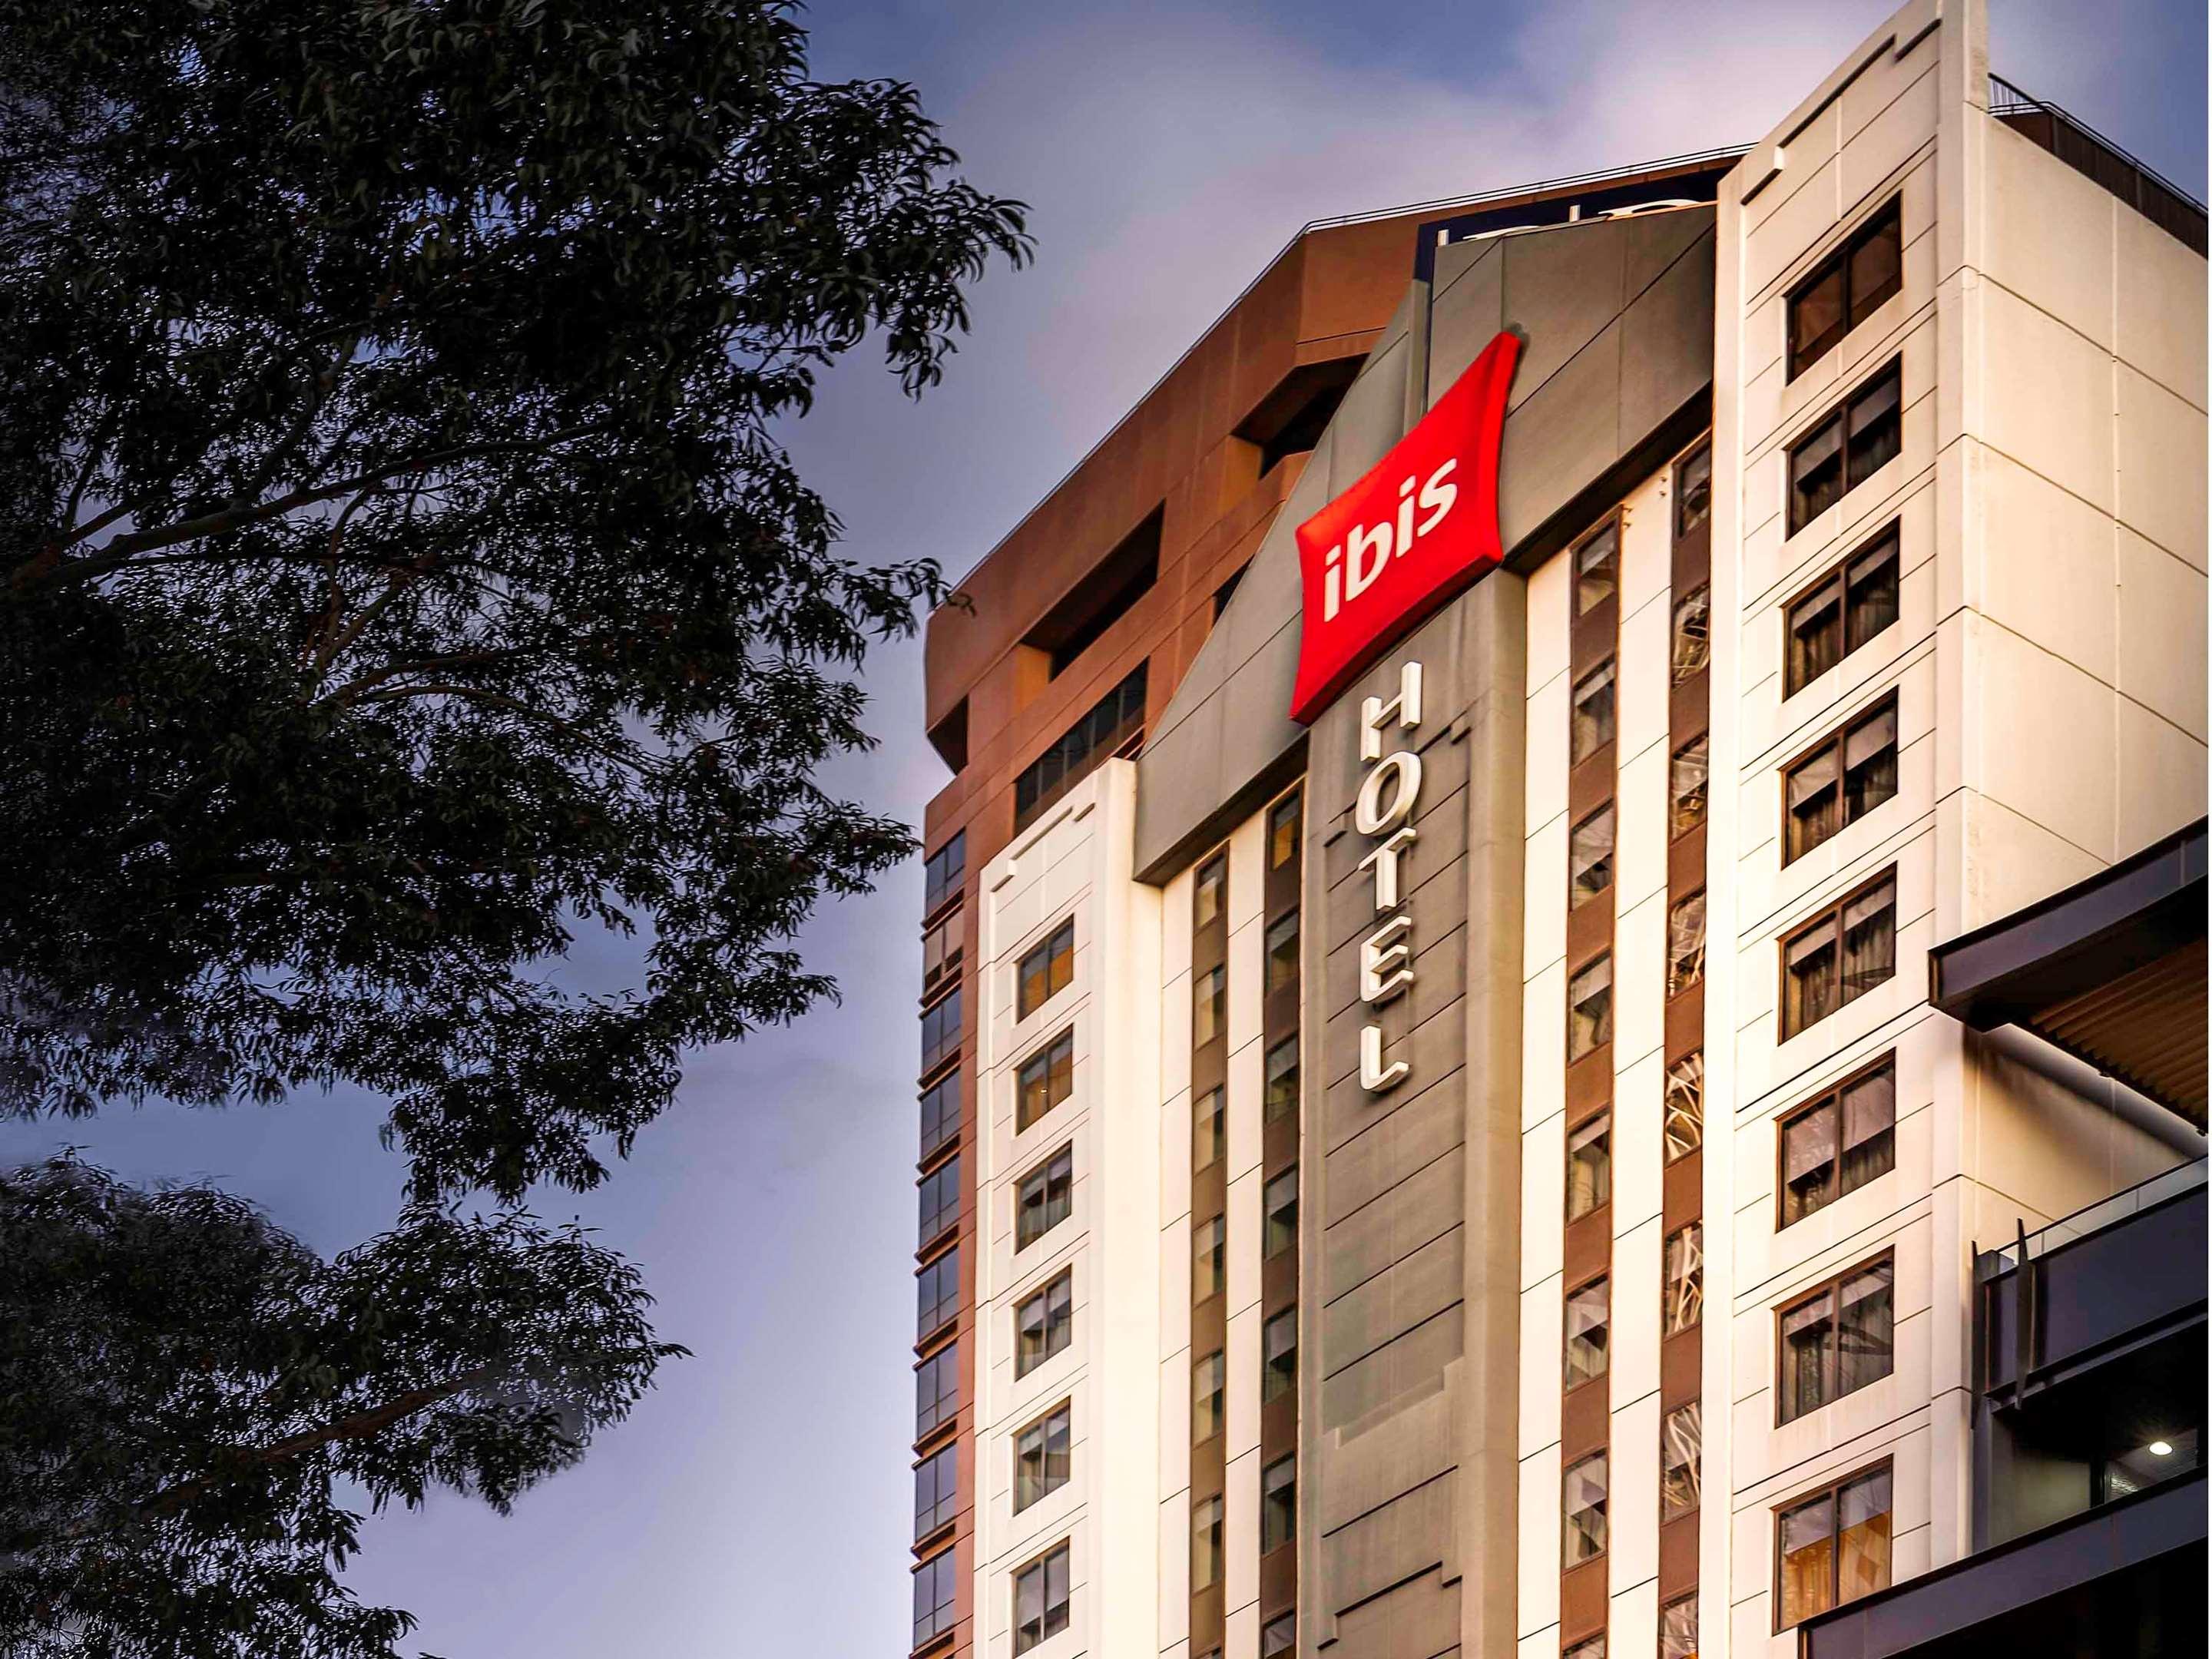 ibis melbourne hotel apartments in melbourne australia from 56 deals reviews photos momondo